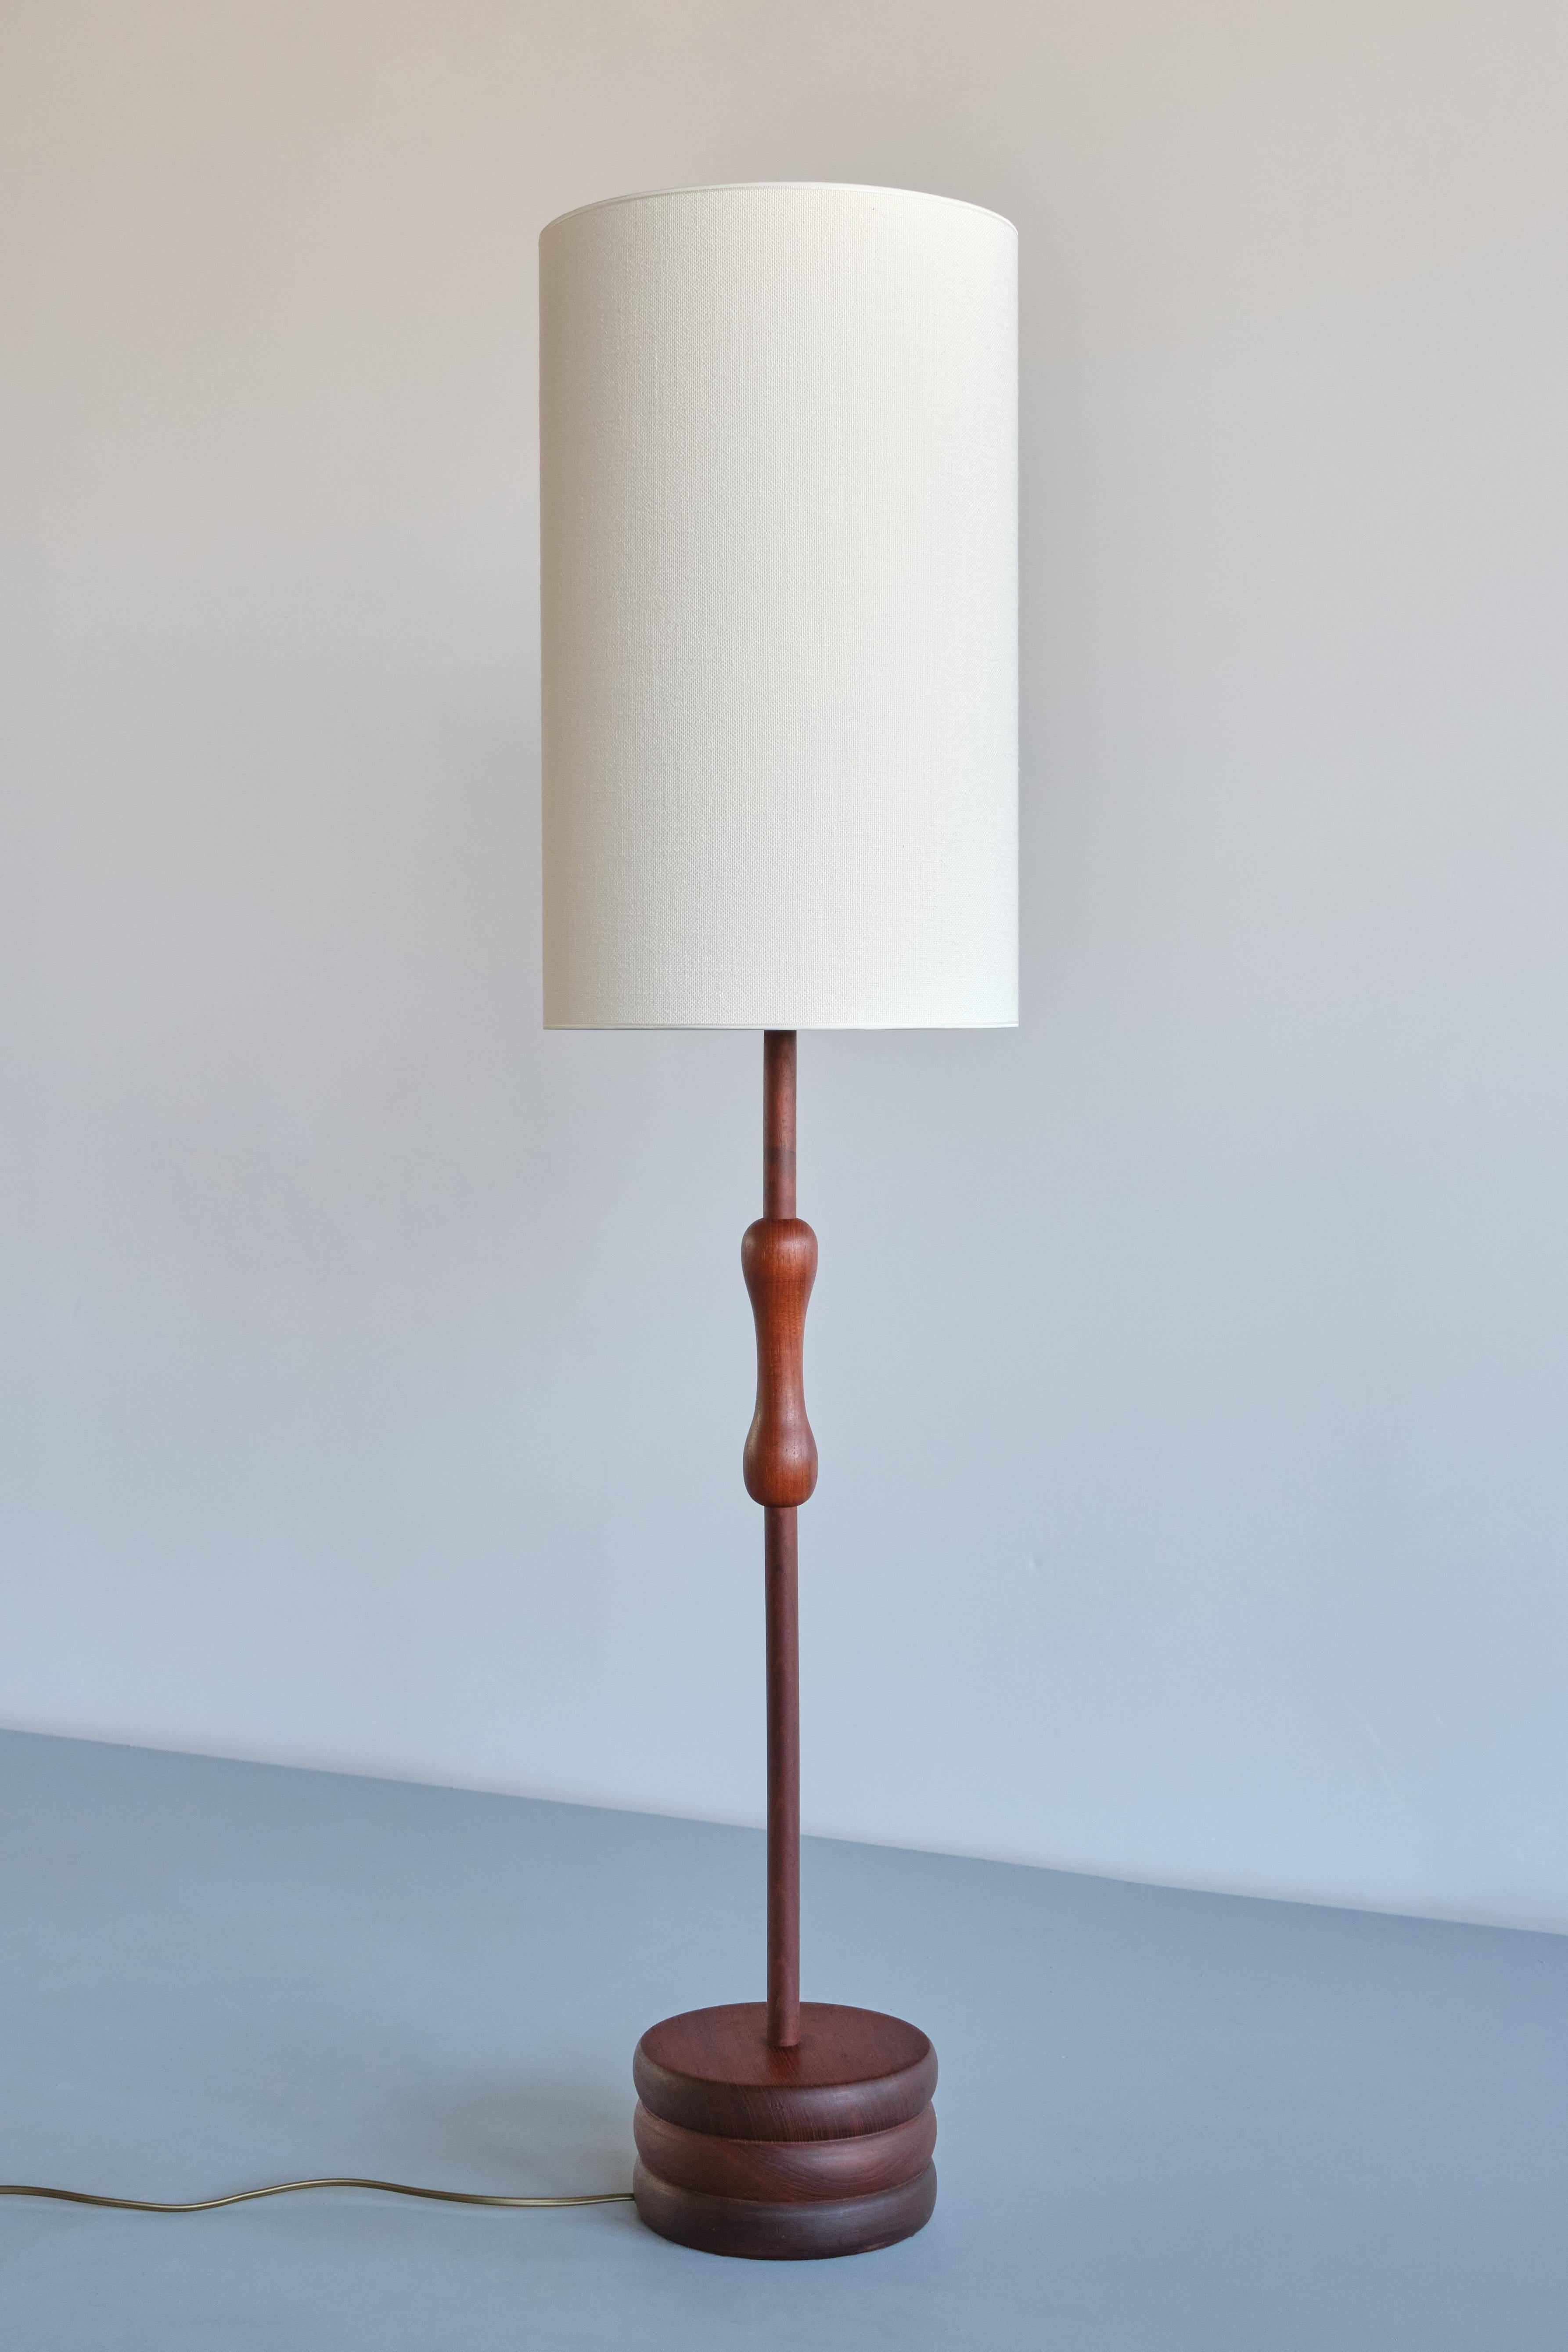 Organic Modern Floor / Table Lamp in Solid Teak Wood, Sweden, 1950s For Sale 5